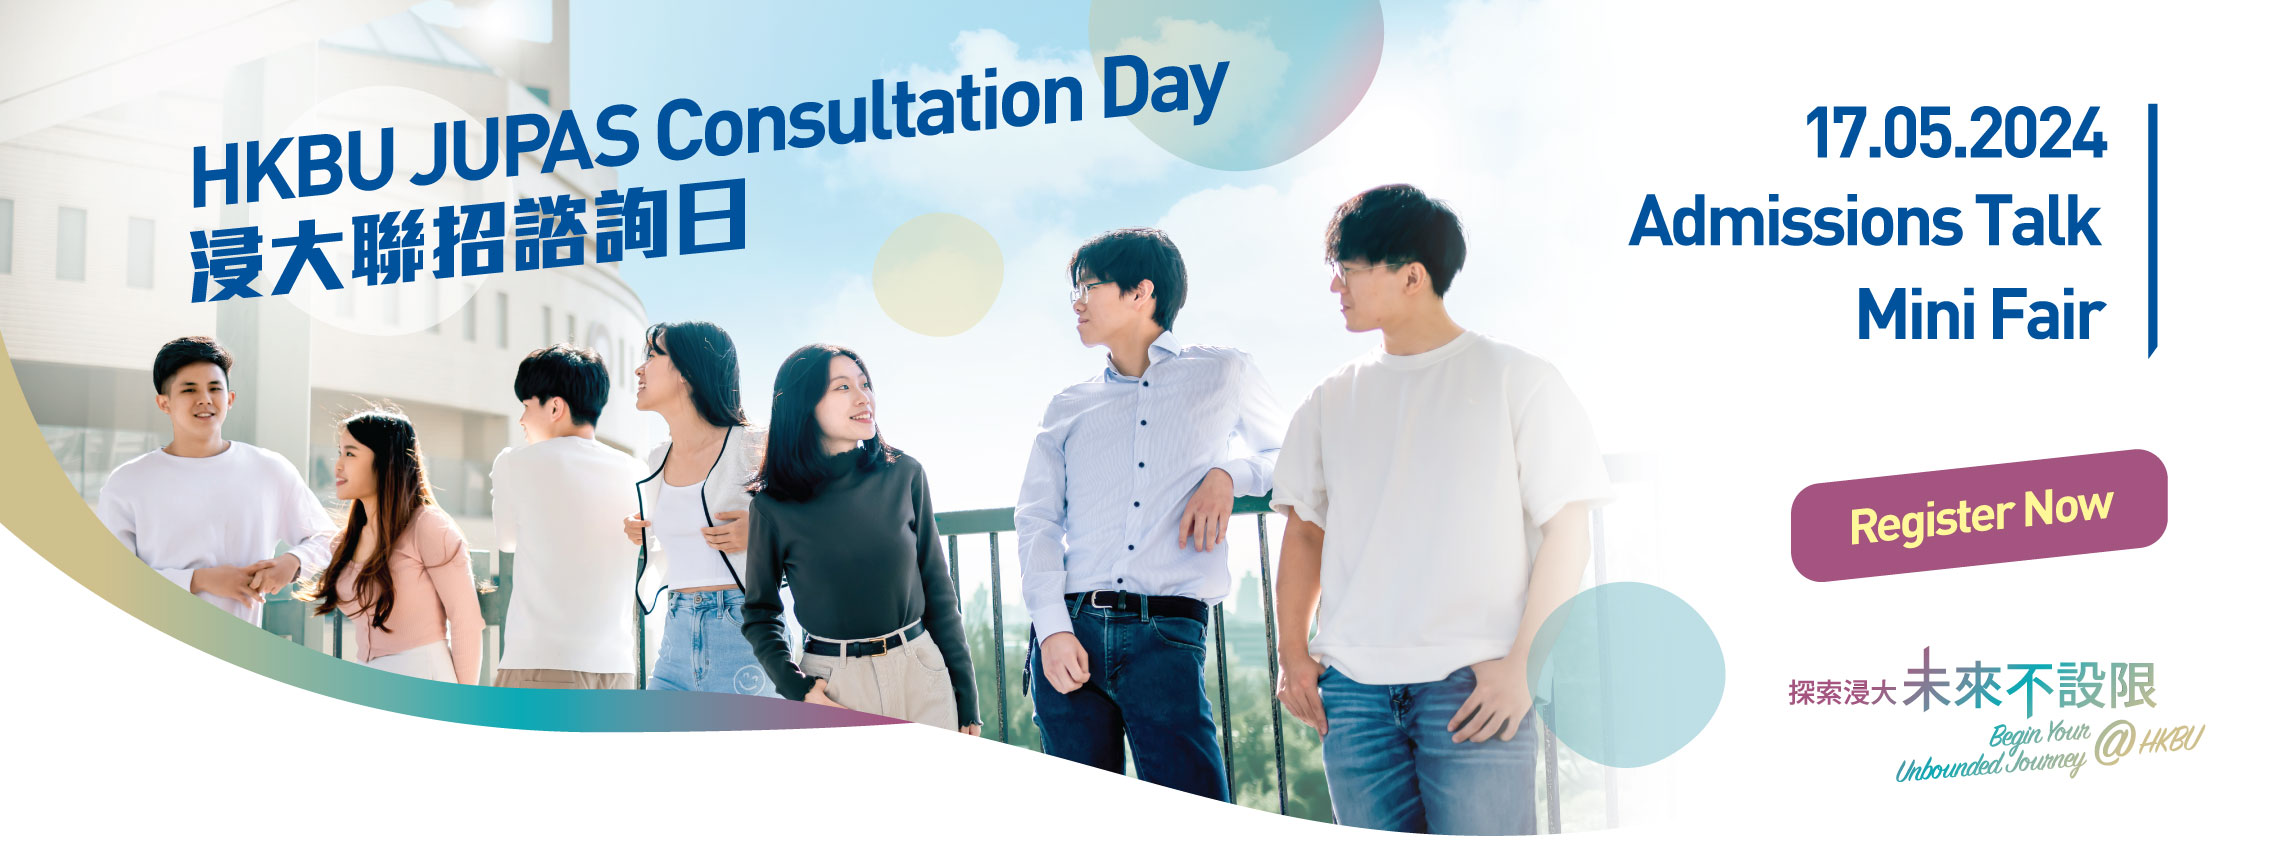 HKBU JUPAS Consultation Day